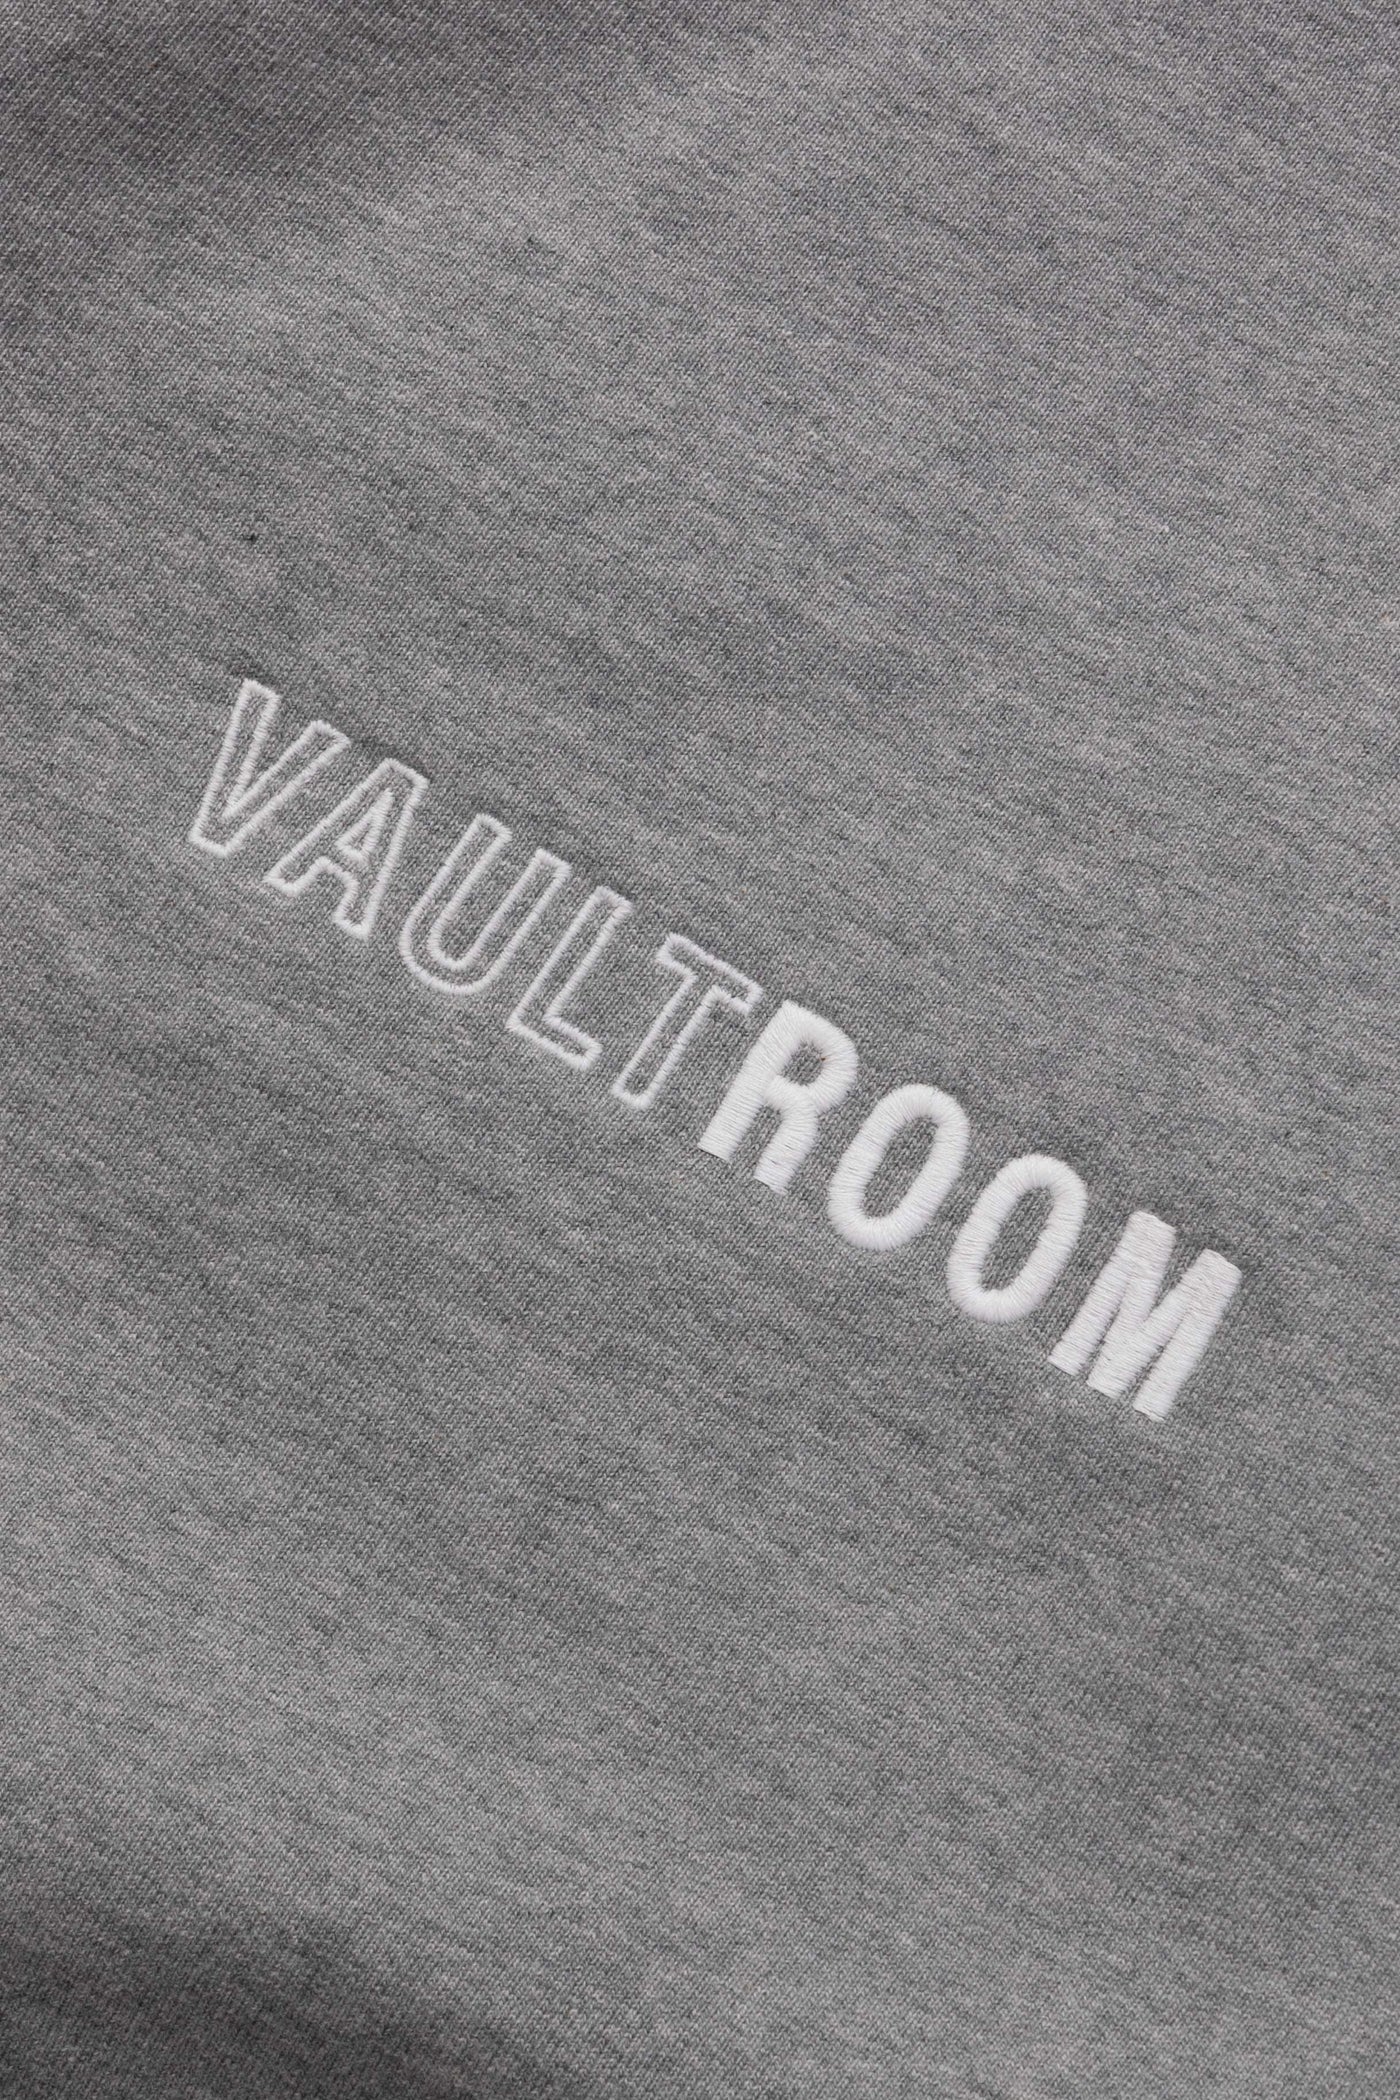 vaultroom OOIS MONOCHRO Hoodie / GRY noonaesthetics.com